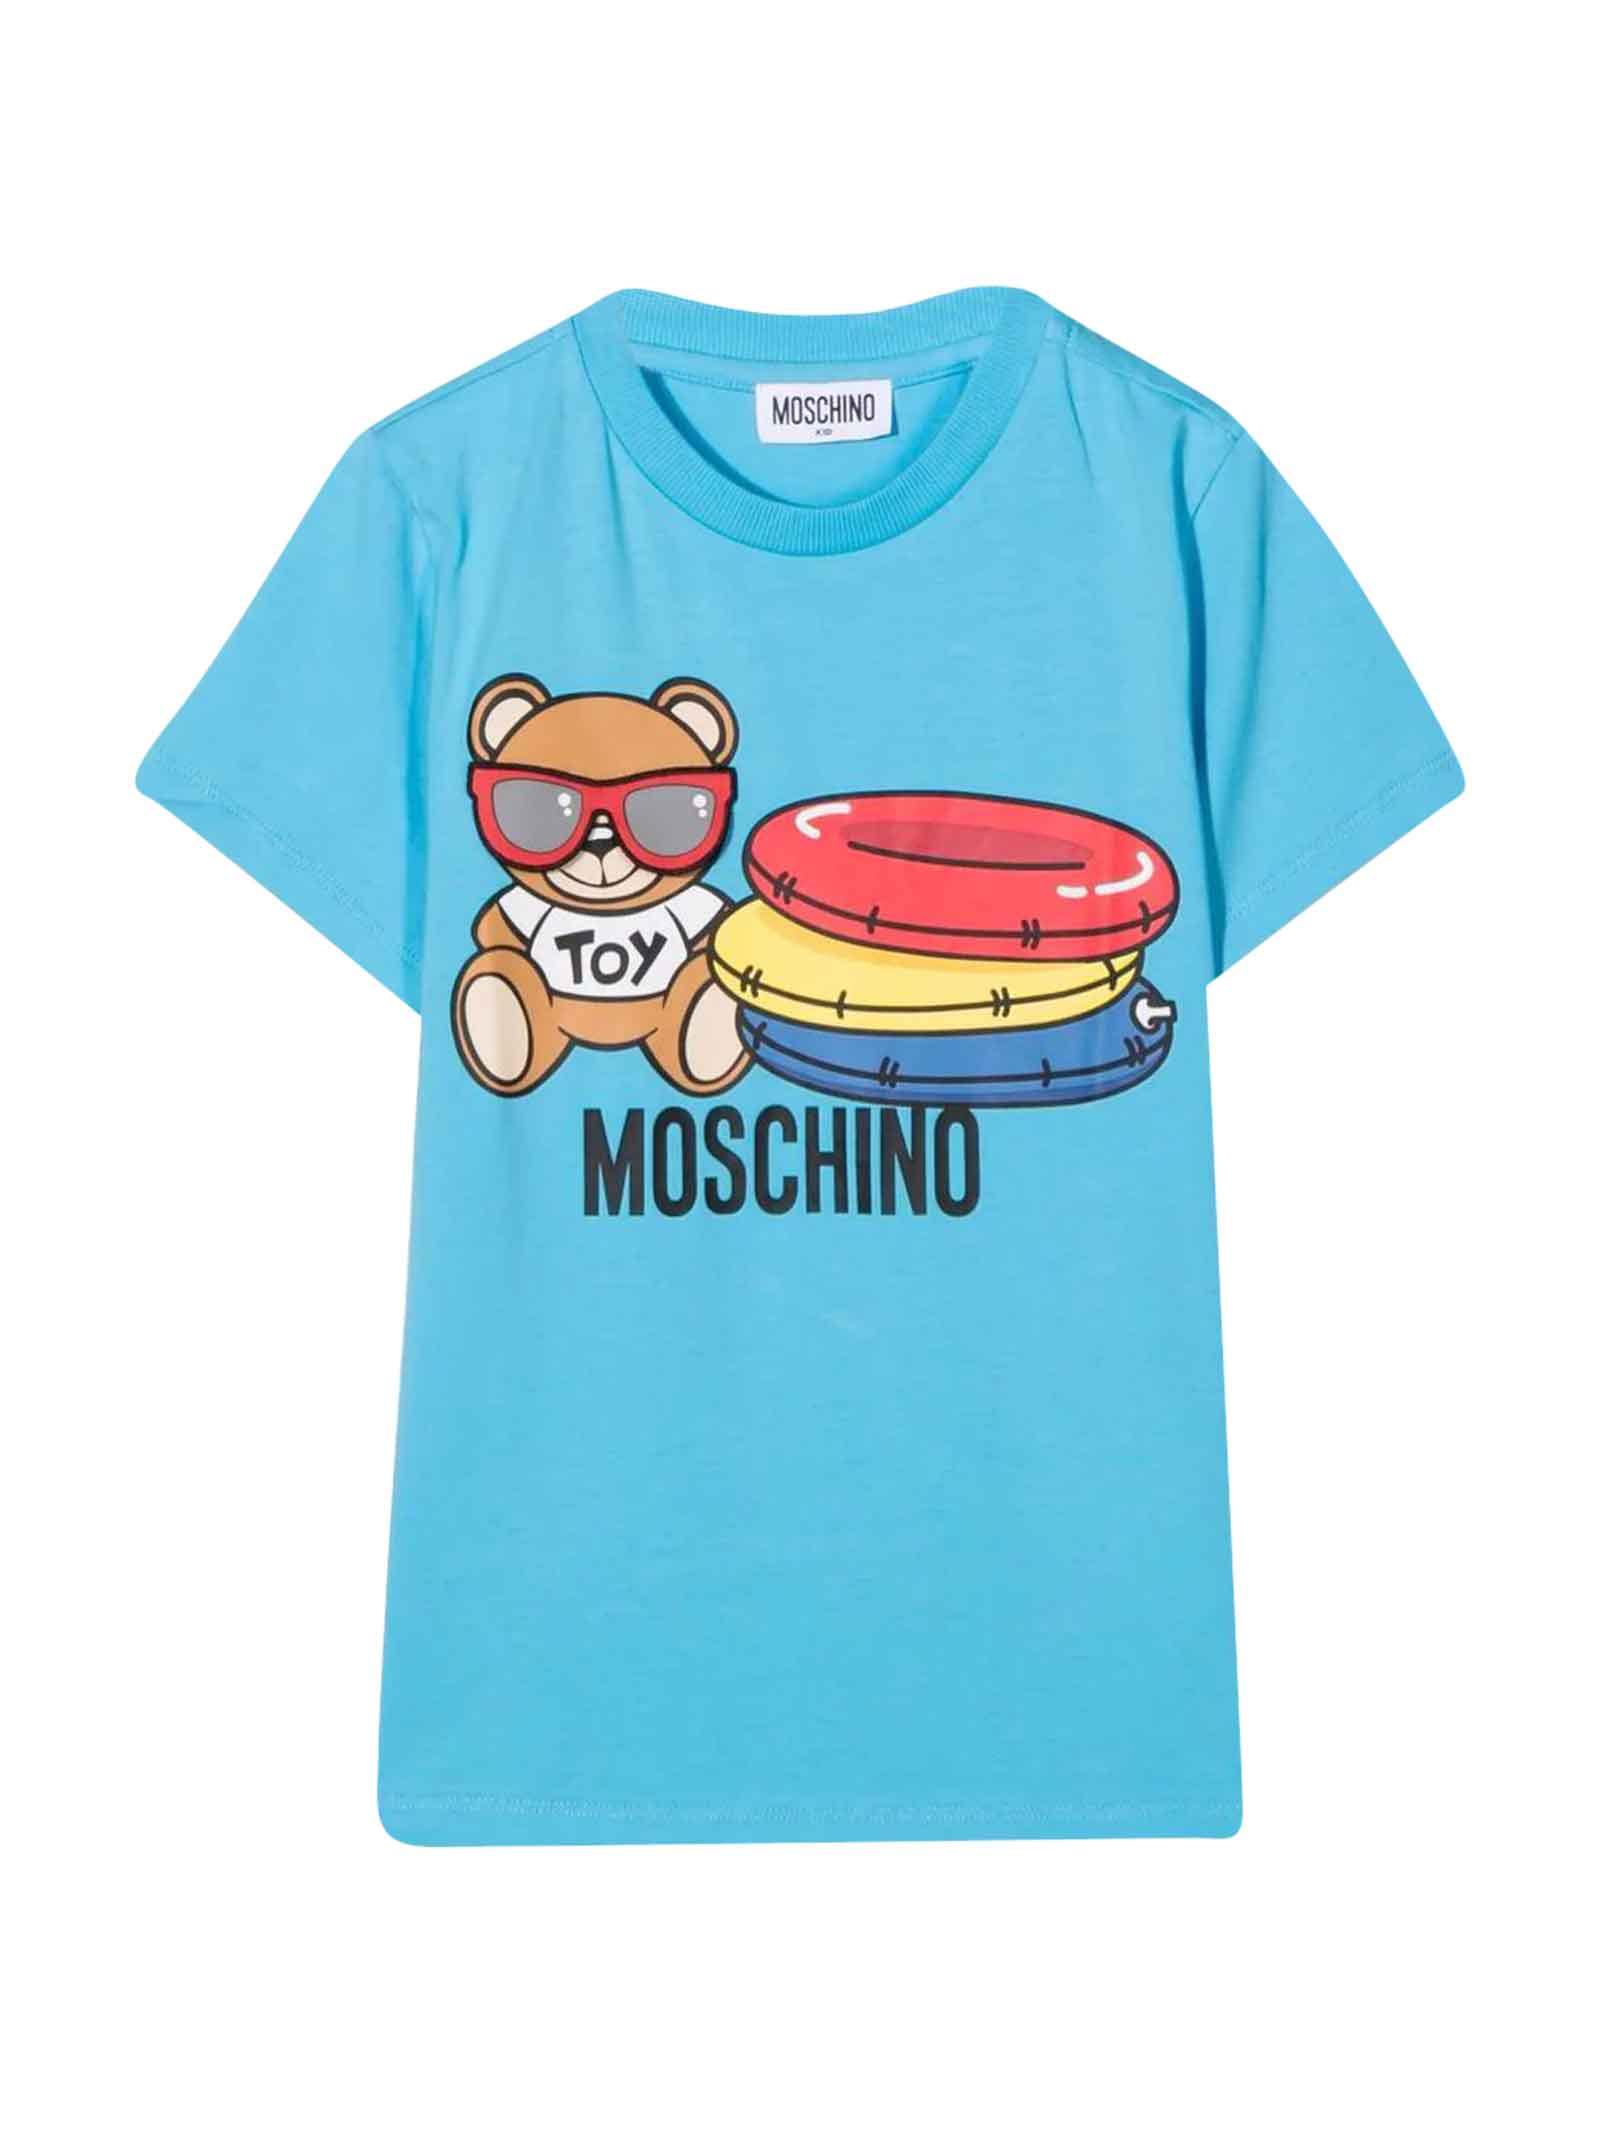 Moschino Blue T-shirt Unisex.